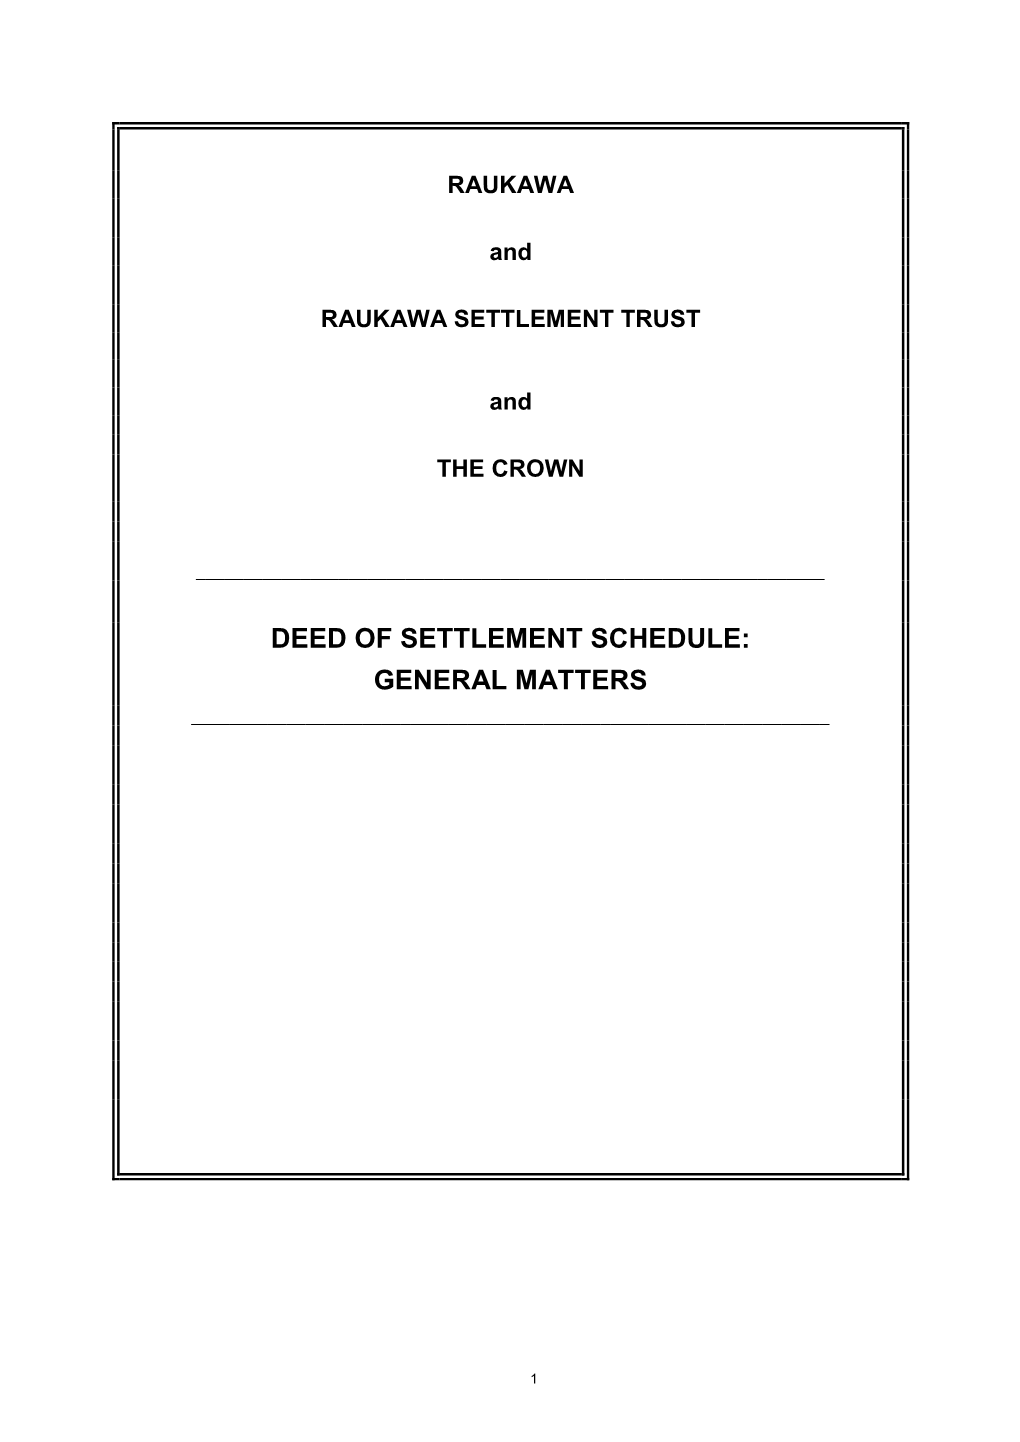 Deed of Settlement Schedule: General Matters ______